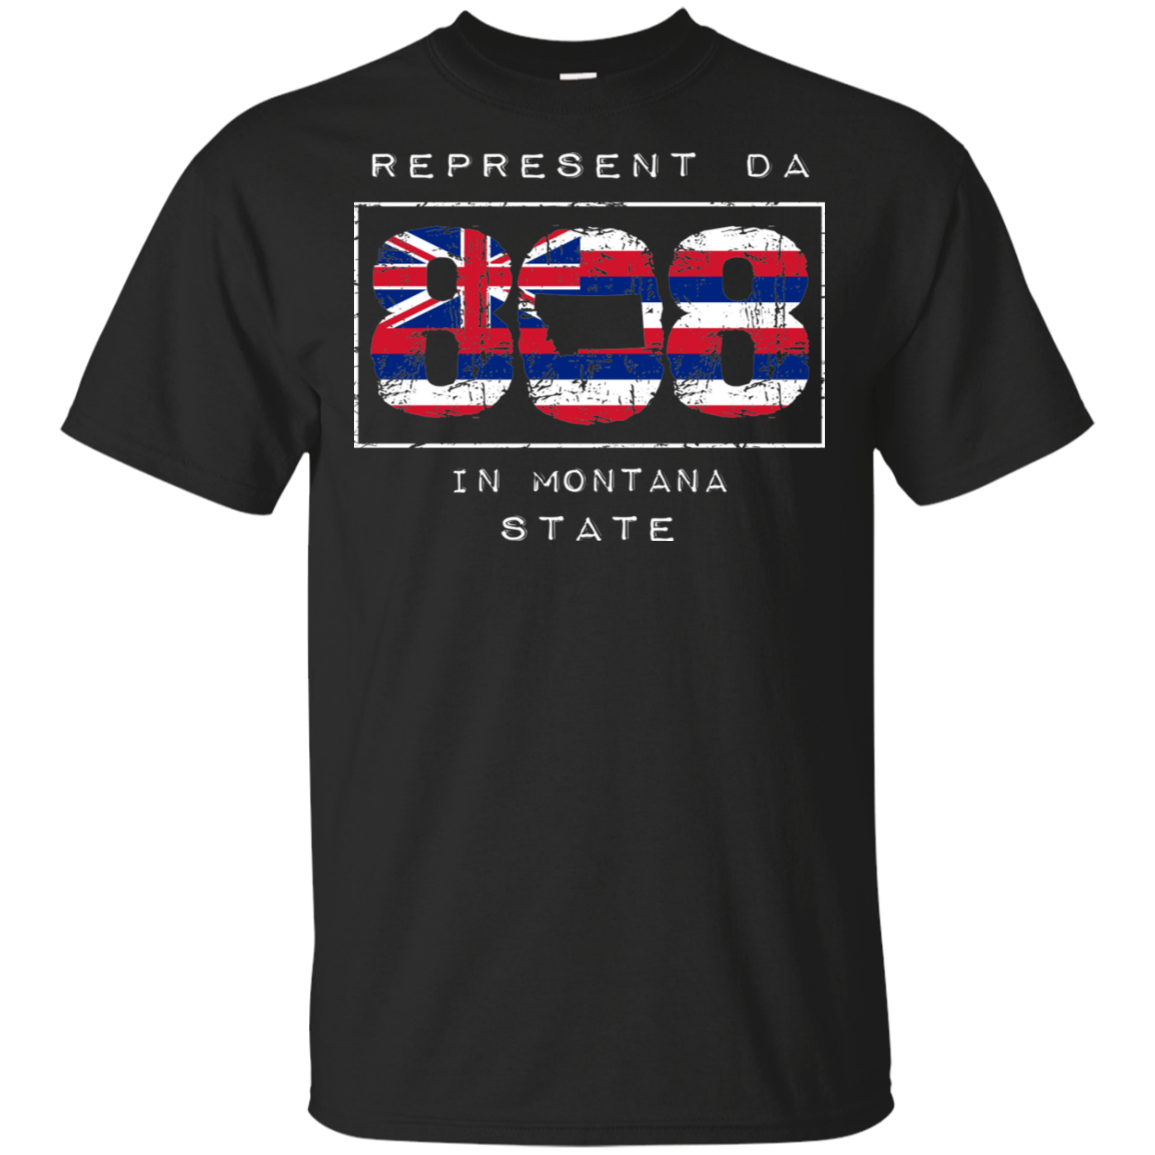 Rep Da 808 In Montana State Ultra Cotton T-Shirt, T-Shirts, Hawaii Nei All Day